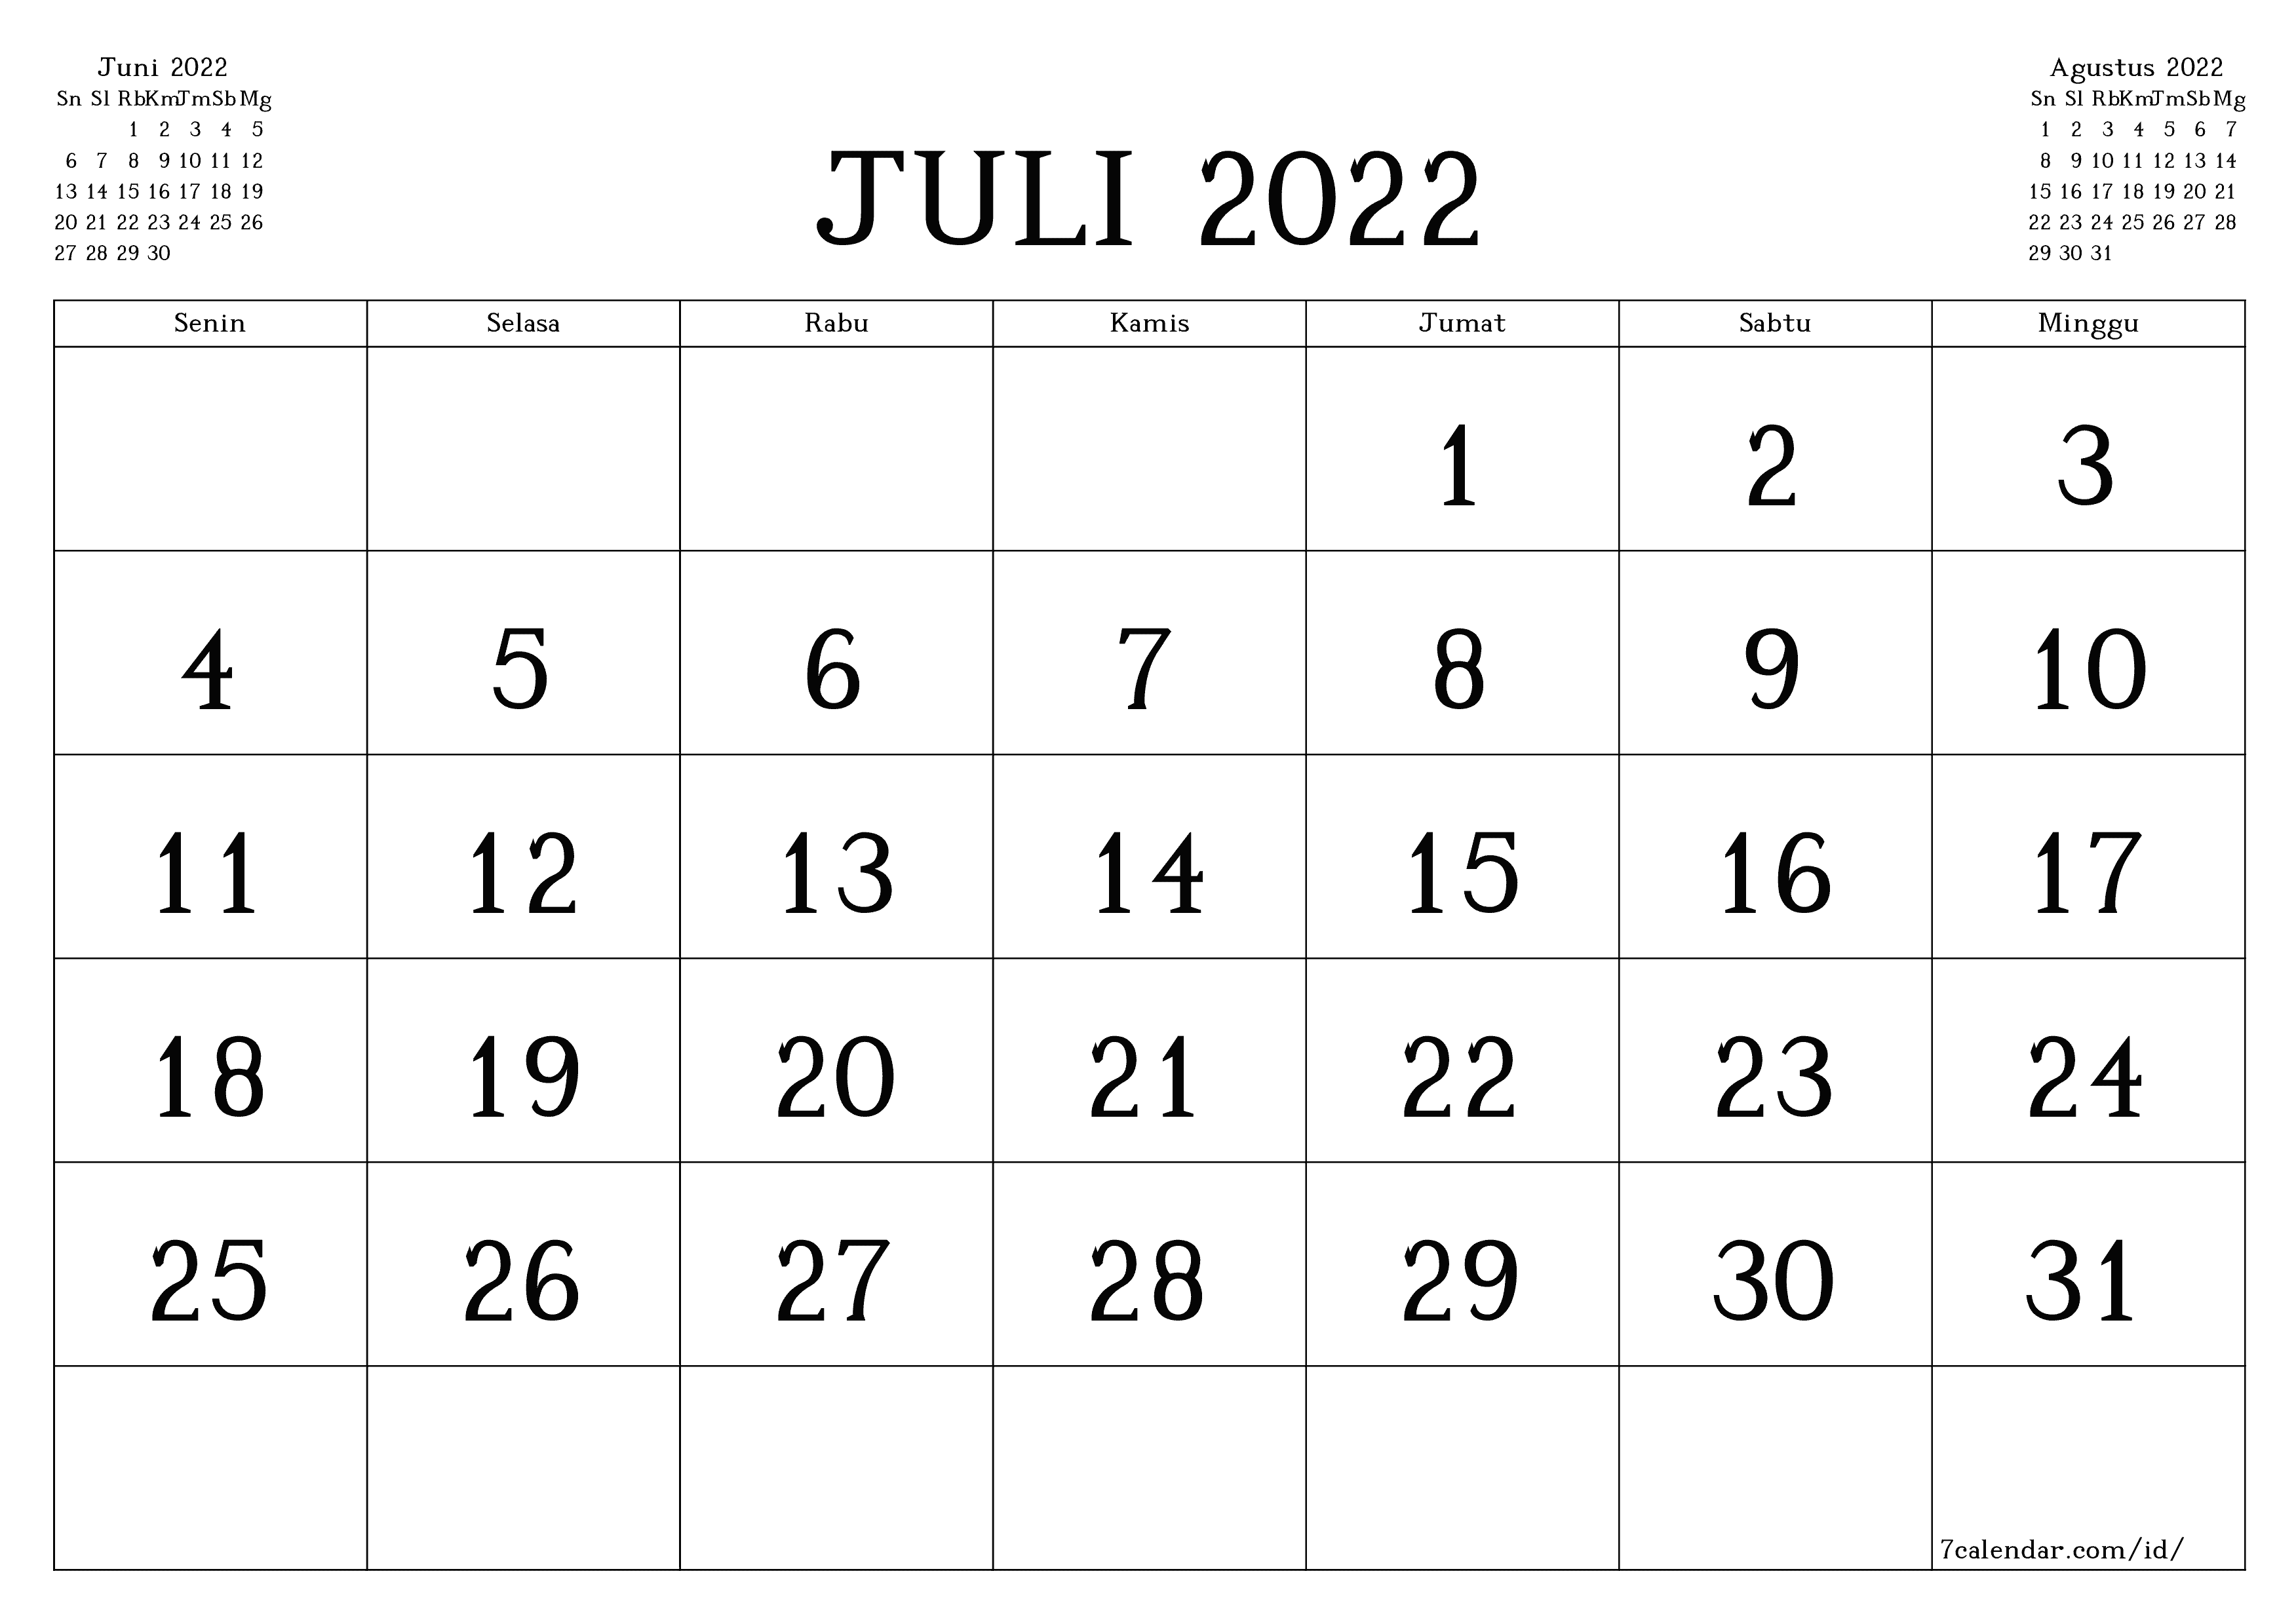 Kosongkan agenda bulanan untuk bulan Juli 2022 dengan catatan, simpan dan cetak ke PDF PNG Indonesian - 7calendar.com